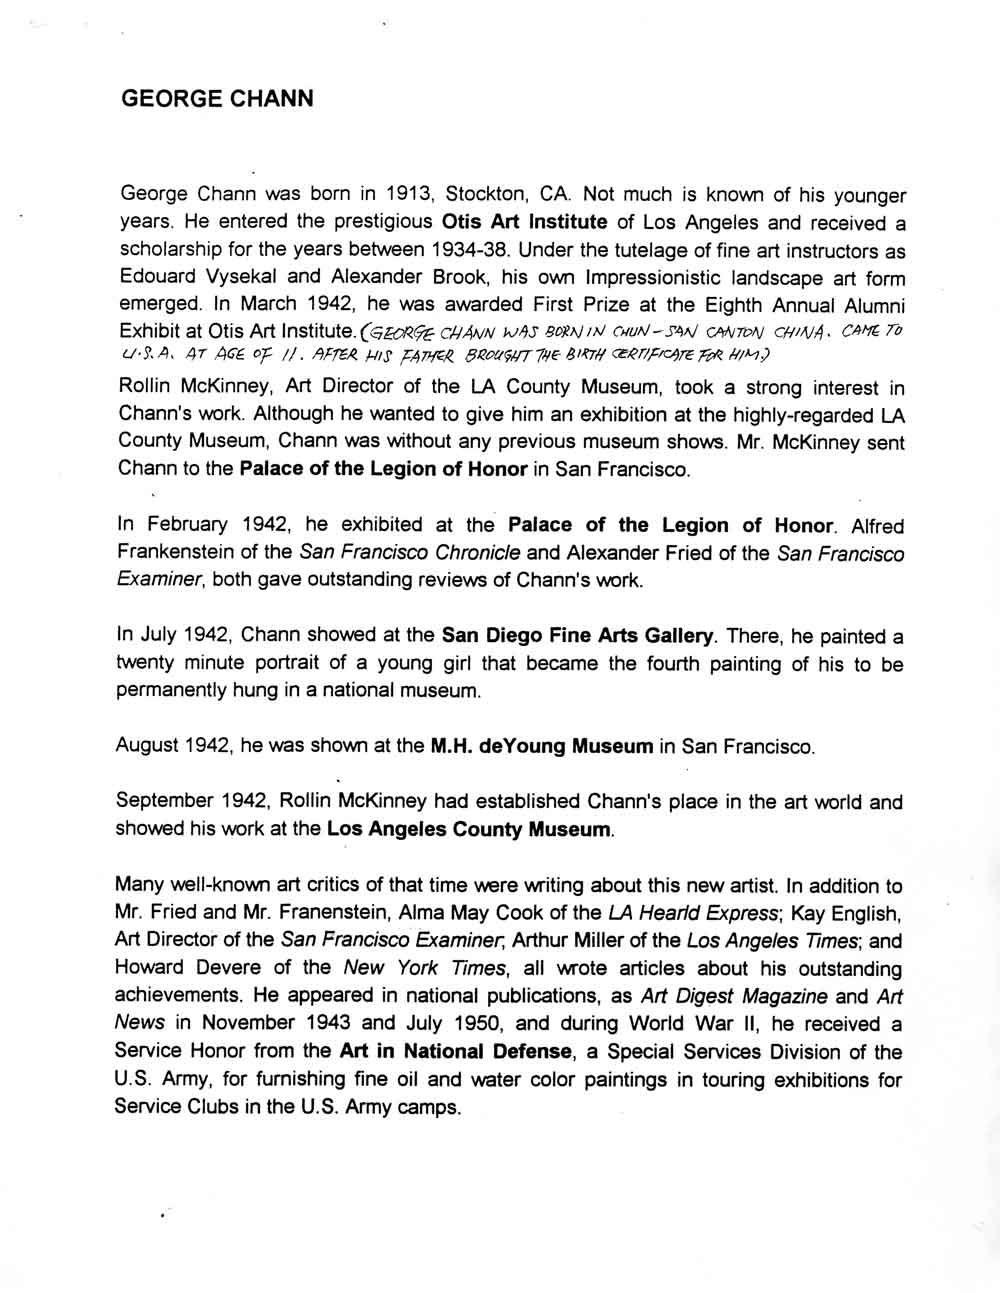 George Chann's Biography/Resume, pg 1